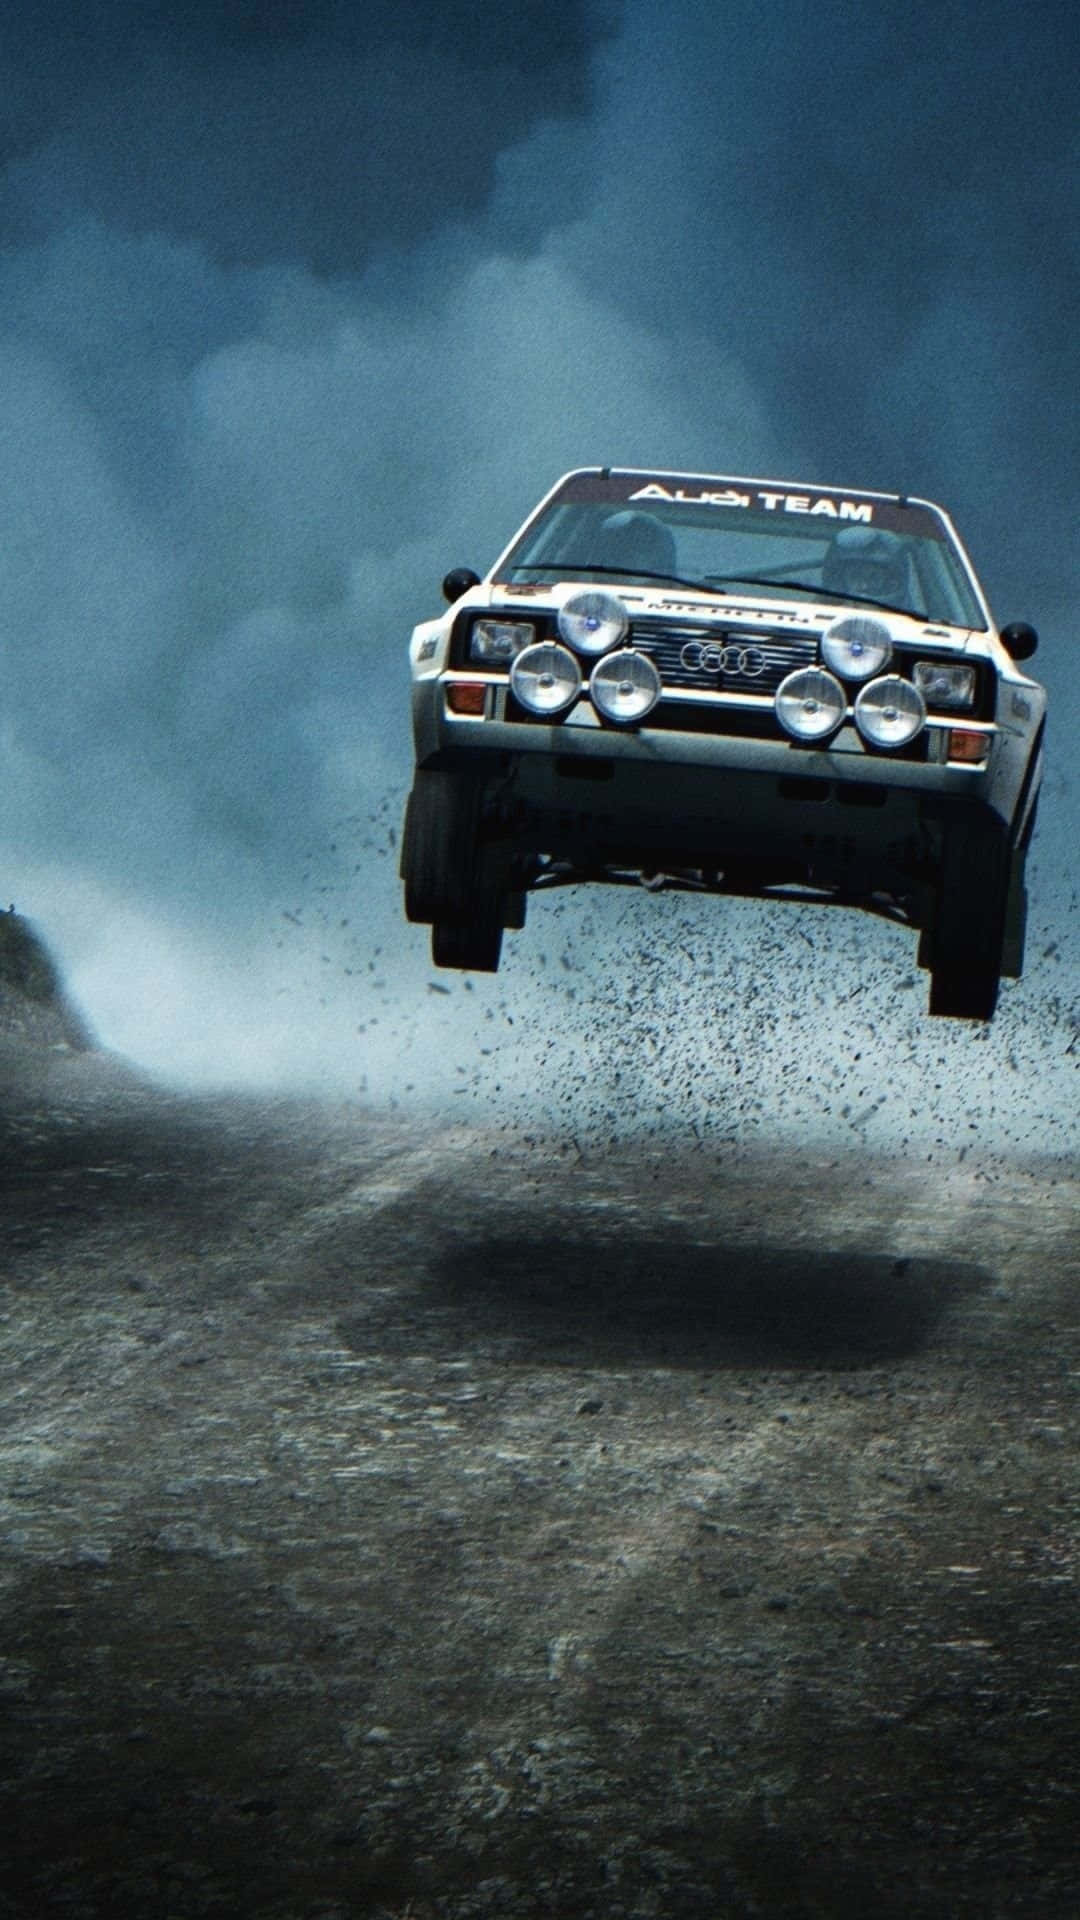 Autod'epoca Dirt Rally Per Iphone Sfondo